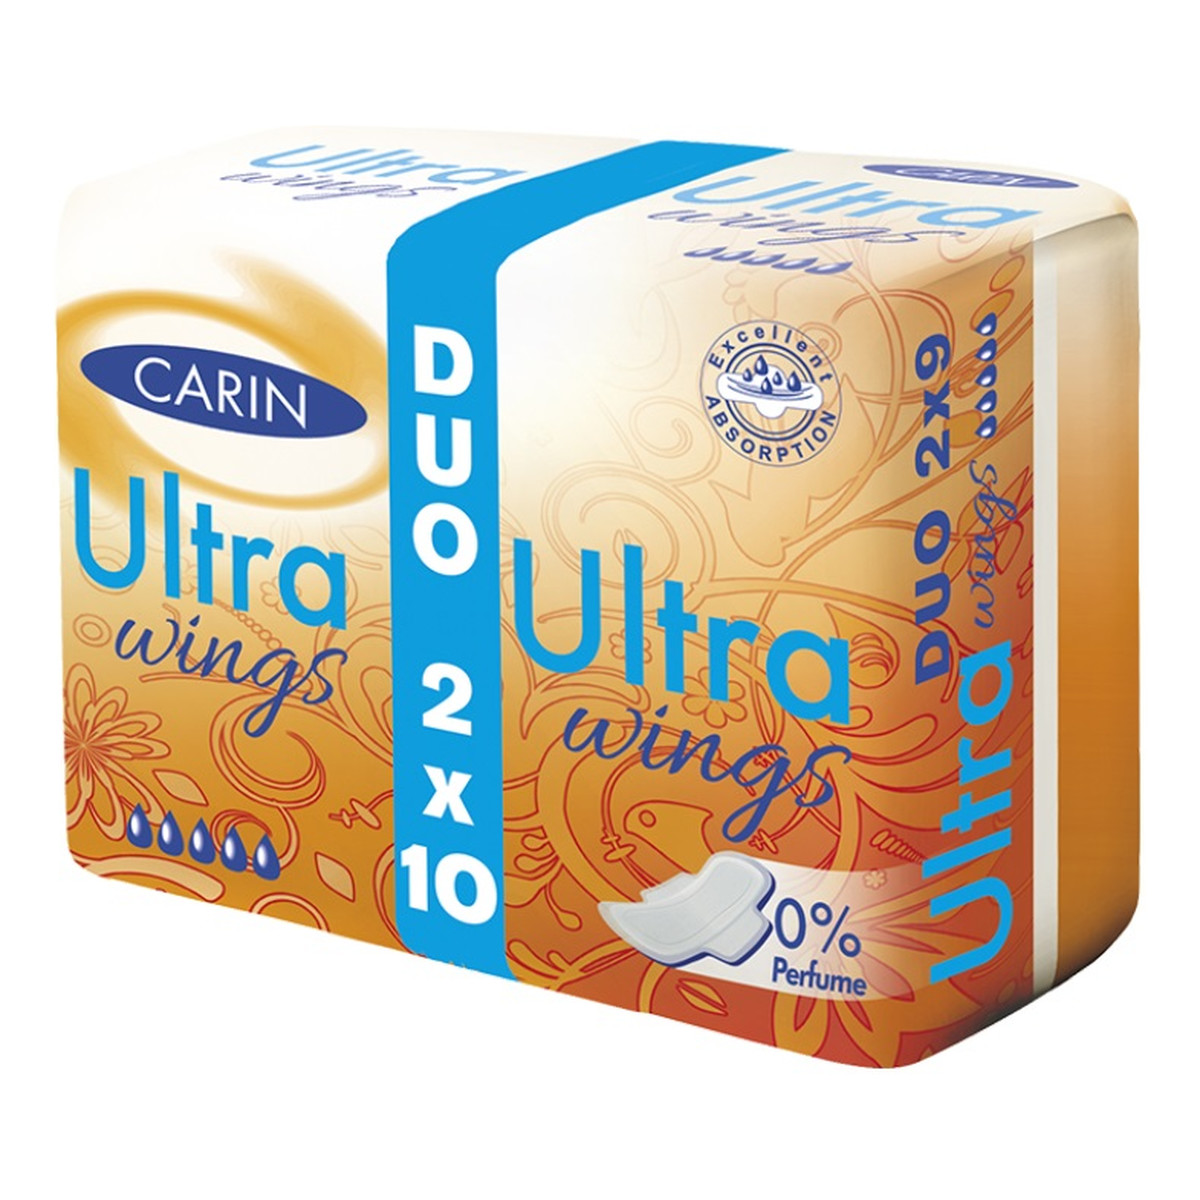 Carin Ultra wings podpaski higieniczne duo pack 2x10szt